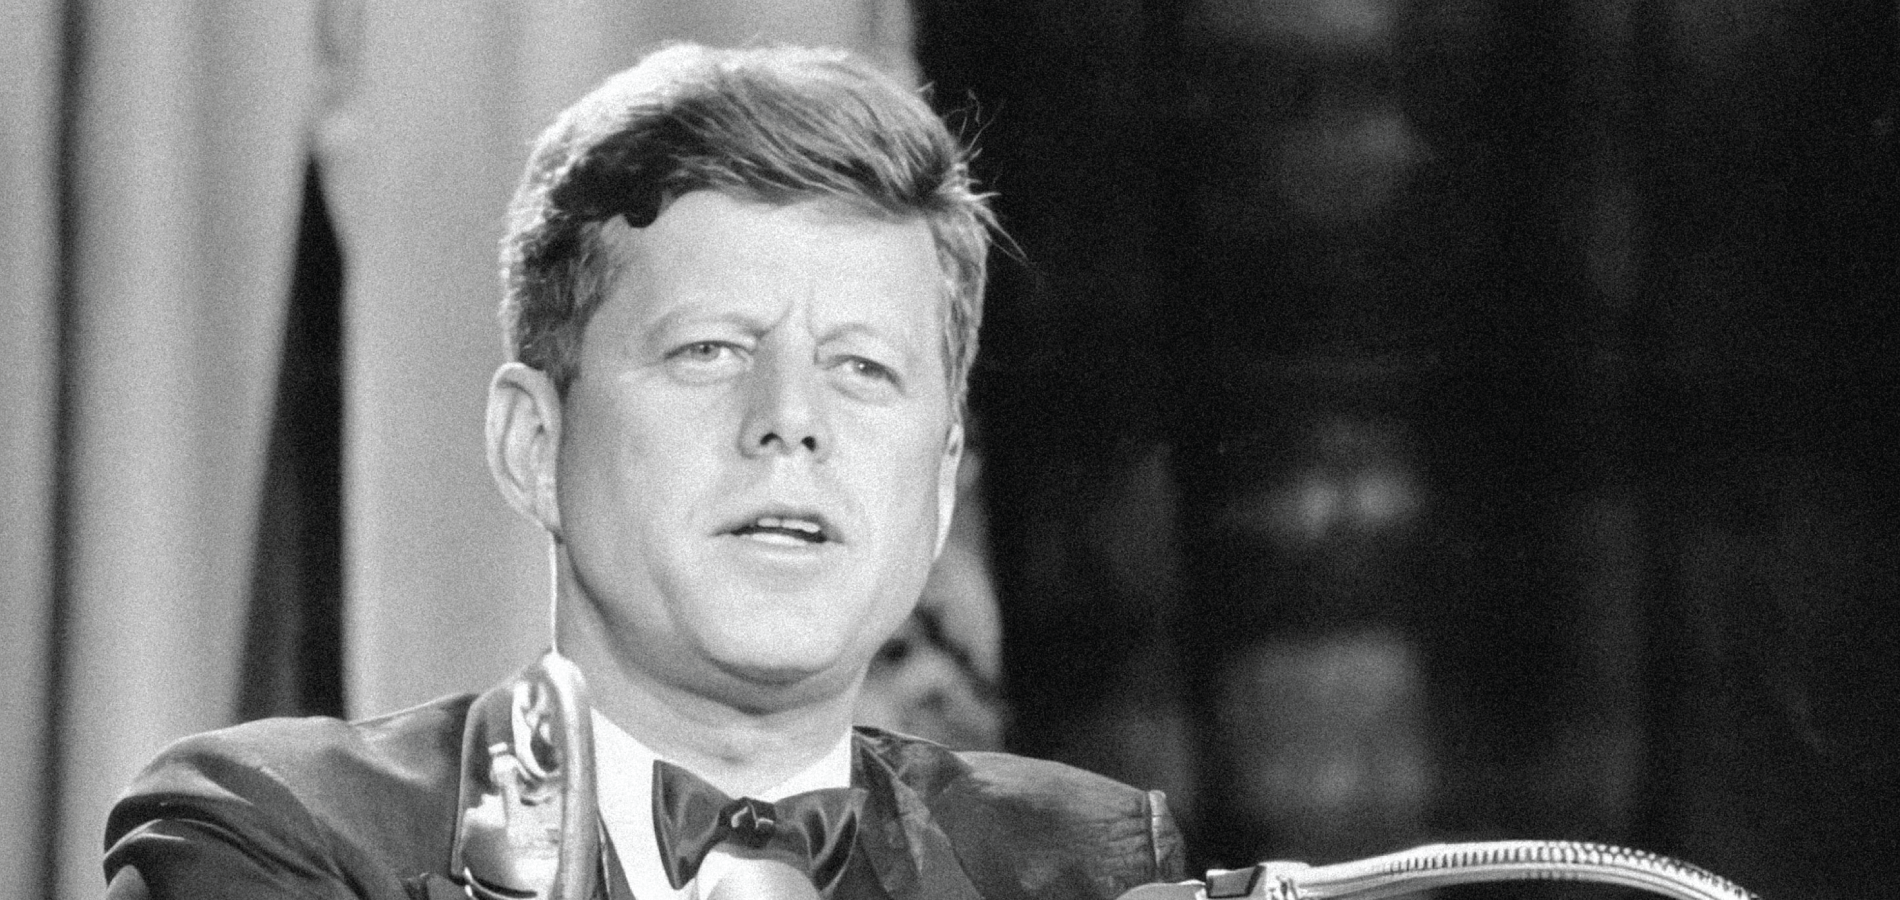 John F. Kennedy speaking at a podium